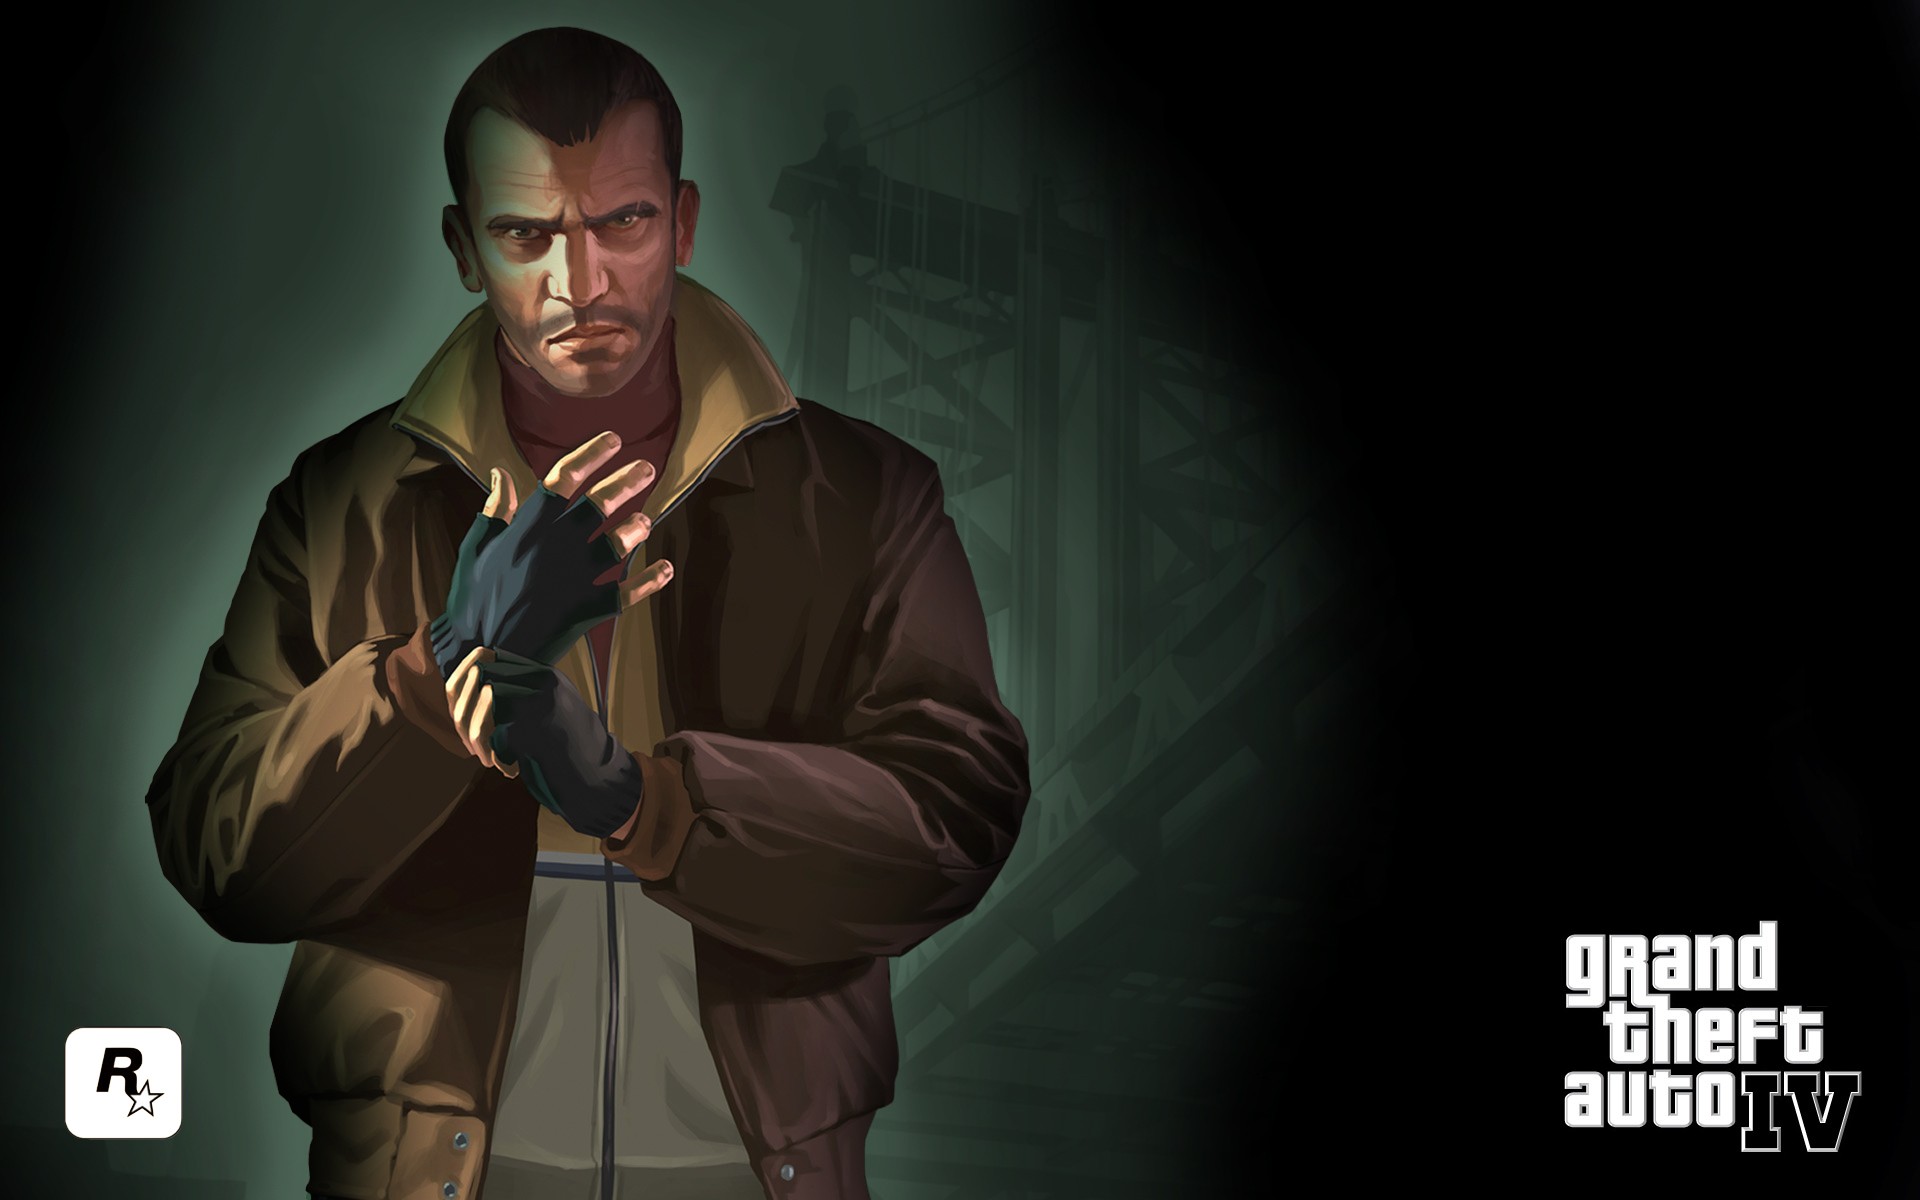 Grand Theft Auto IV, Video Games, Niko Bellic Wallpaper